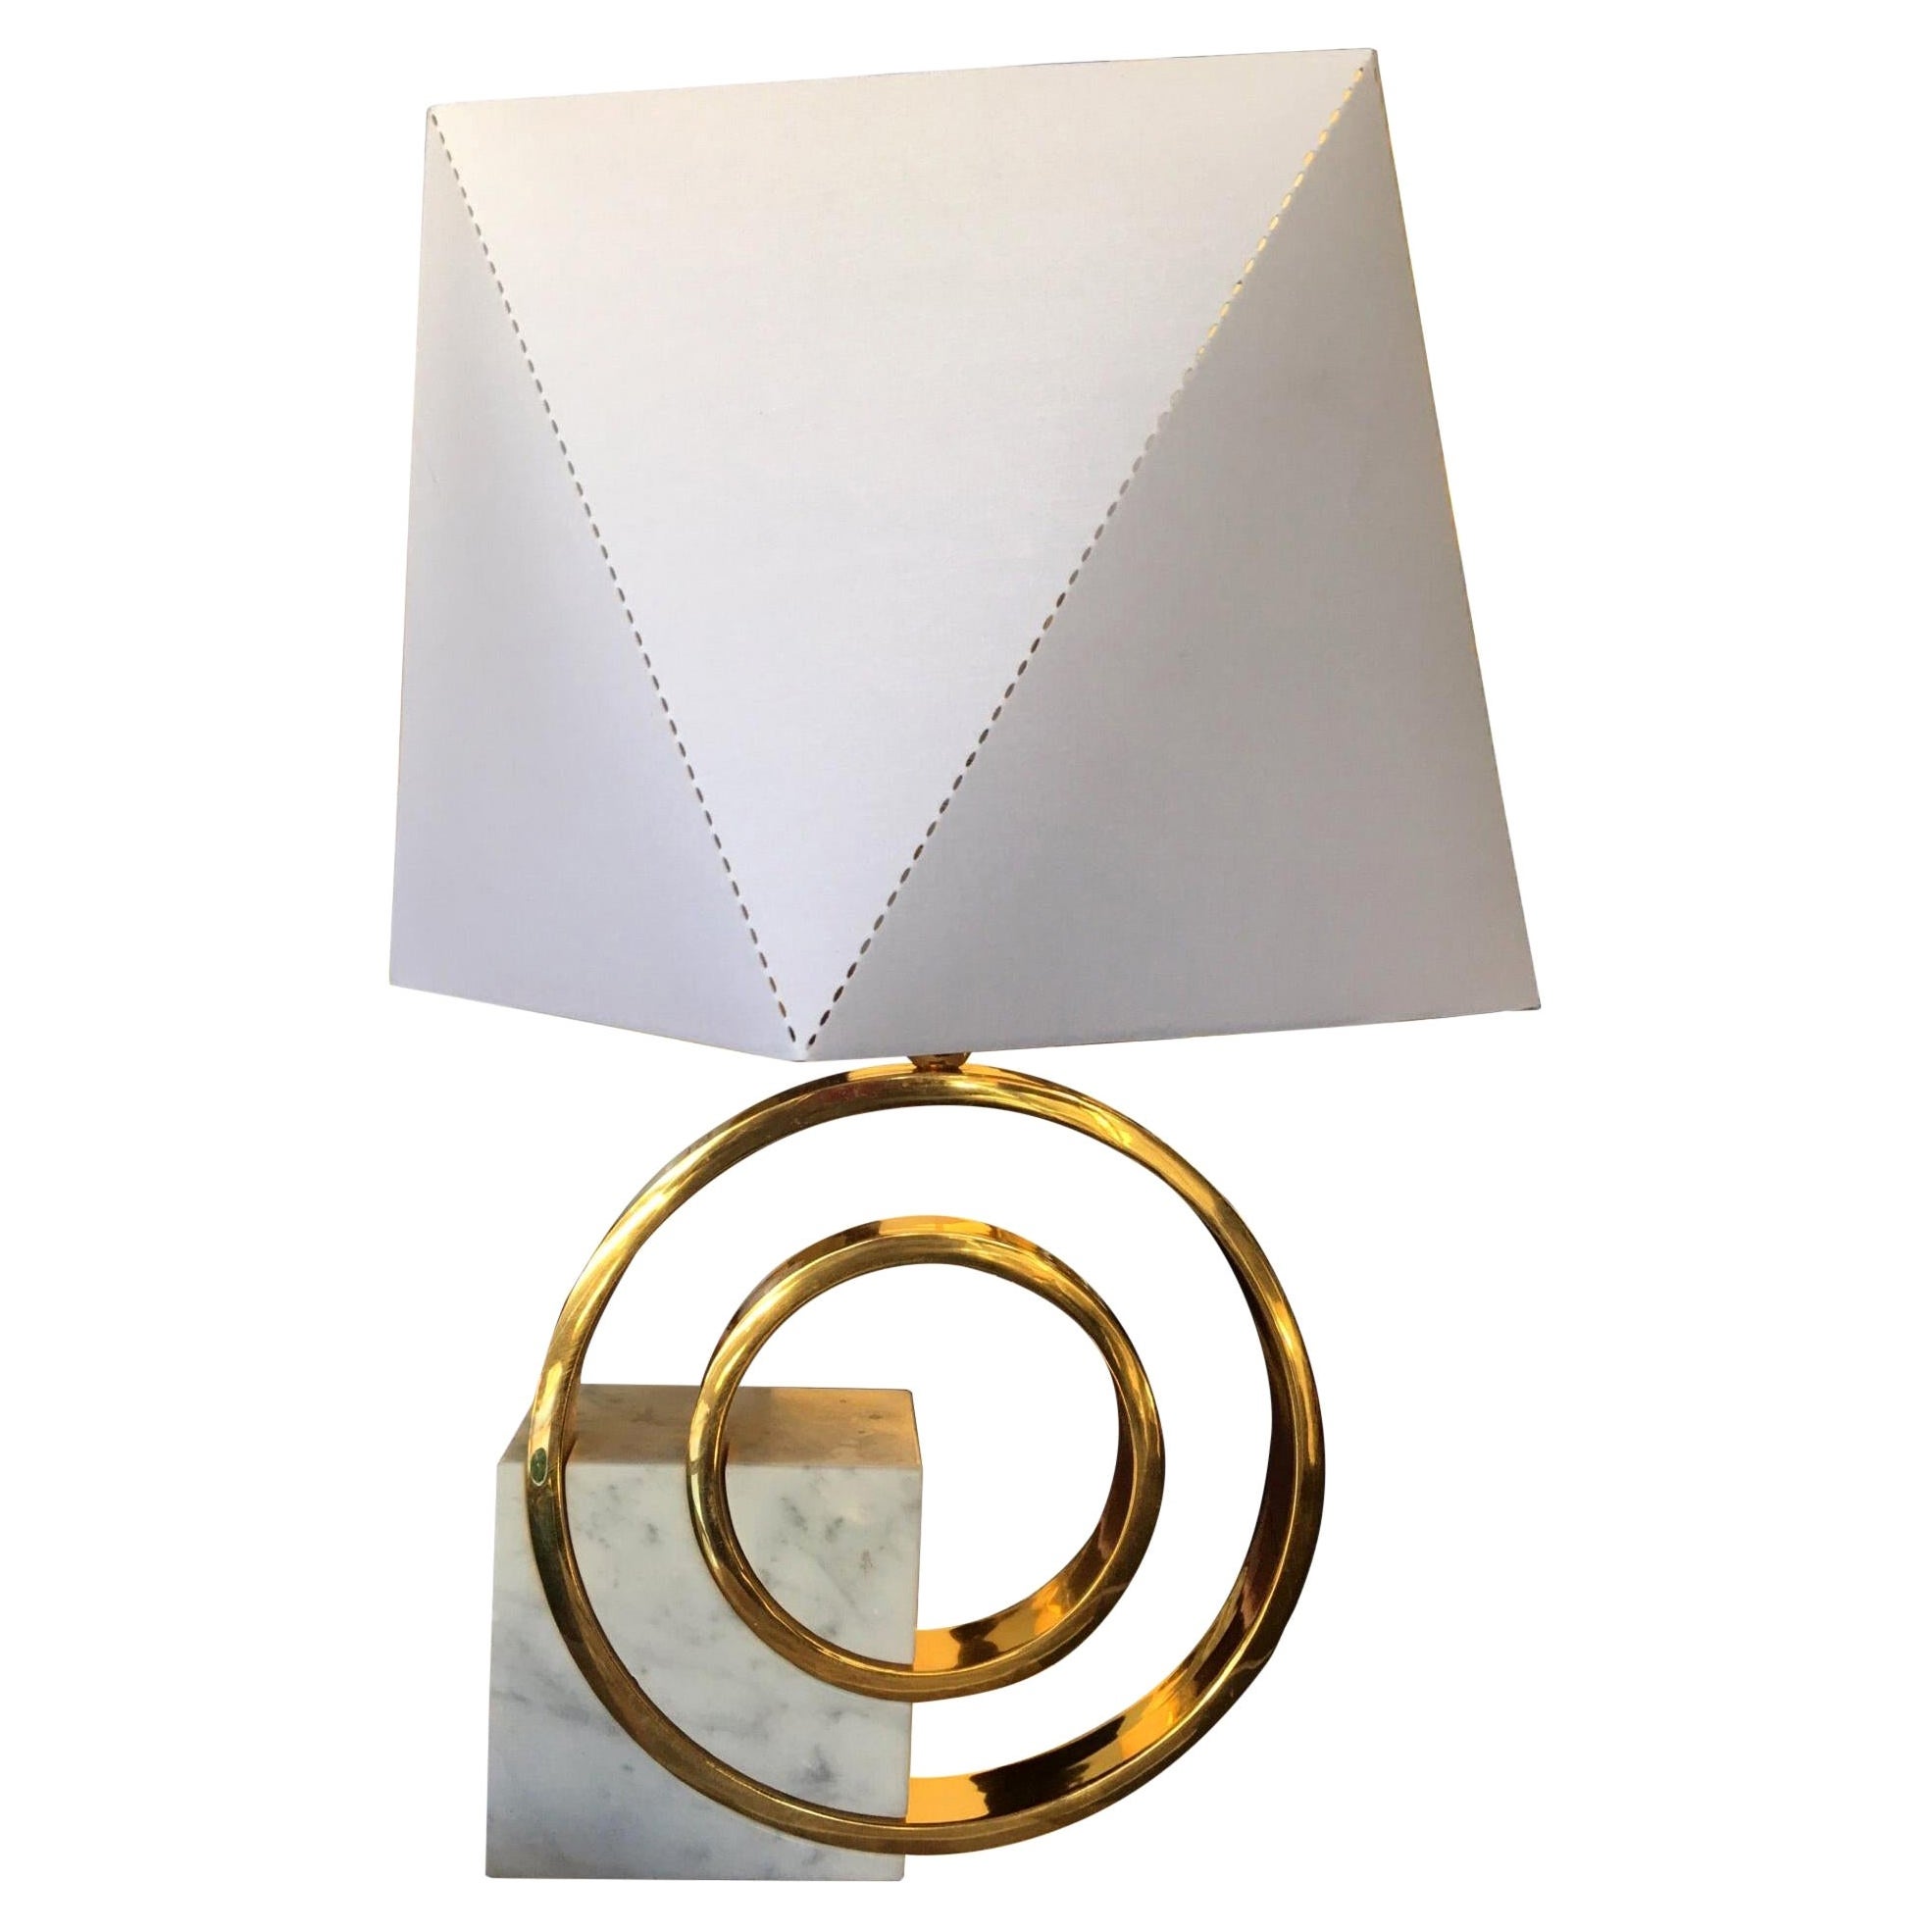  1970s Italian Modern Lamp in Brass & Marble Custom Shade by Giovanni Banci